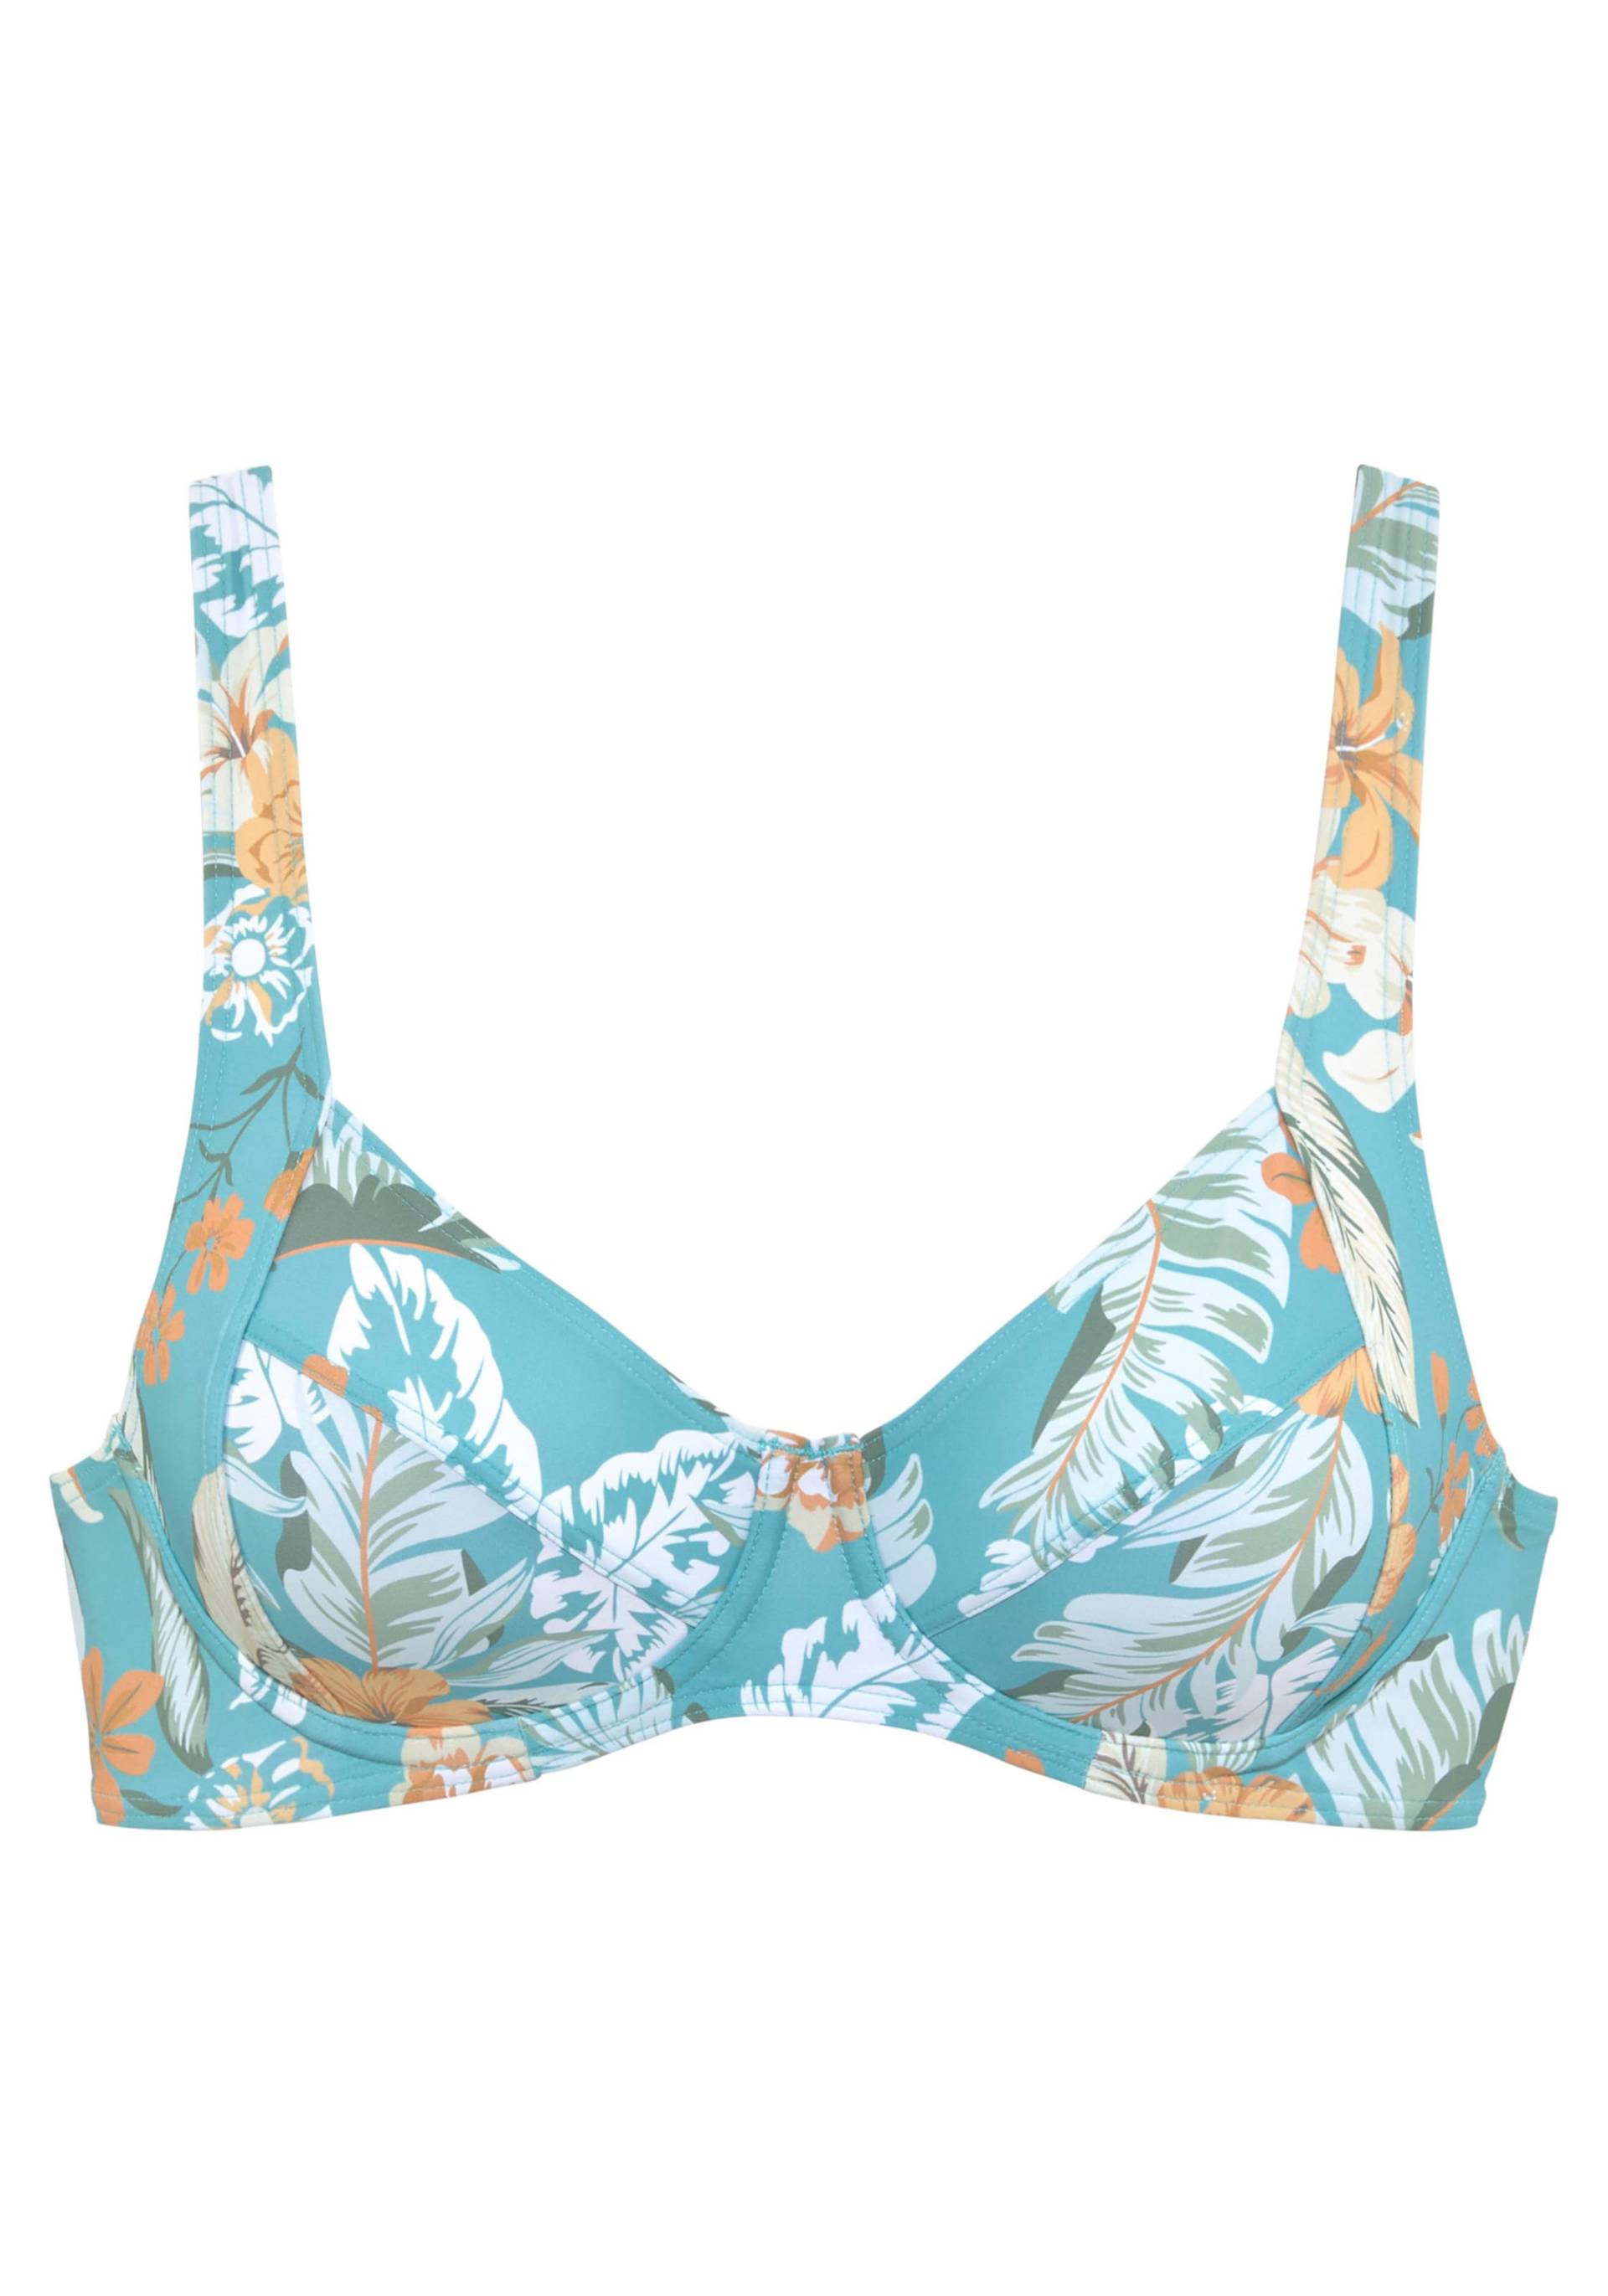 Bügel-Bikini-Top in aquablau-bedruckt von Sunseeker